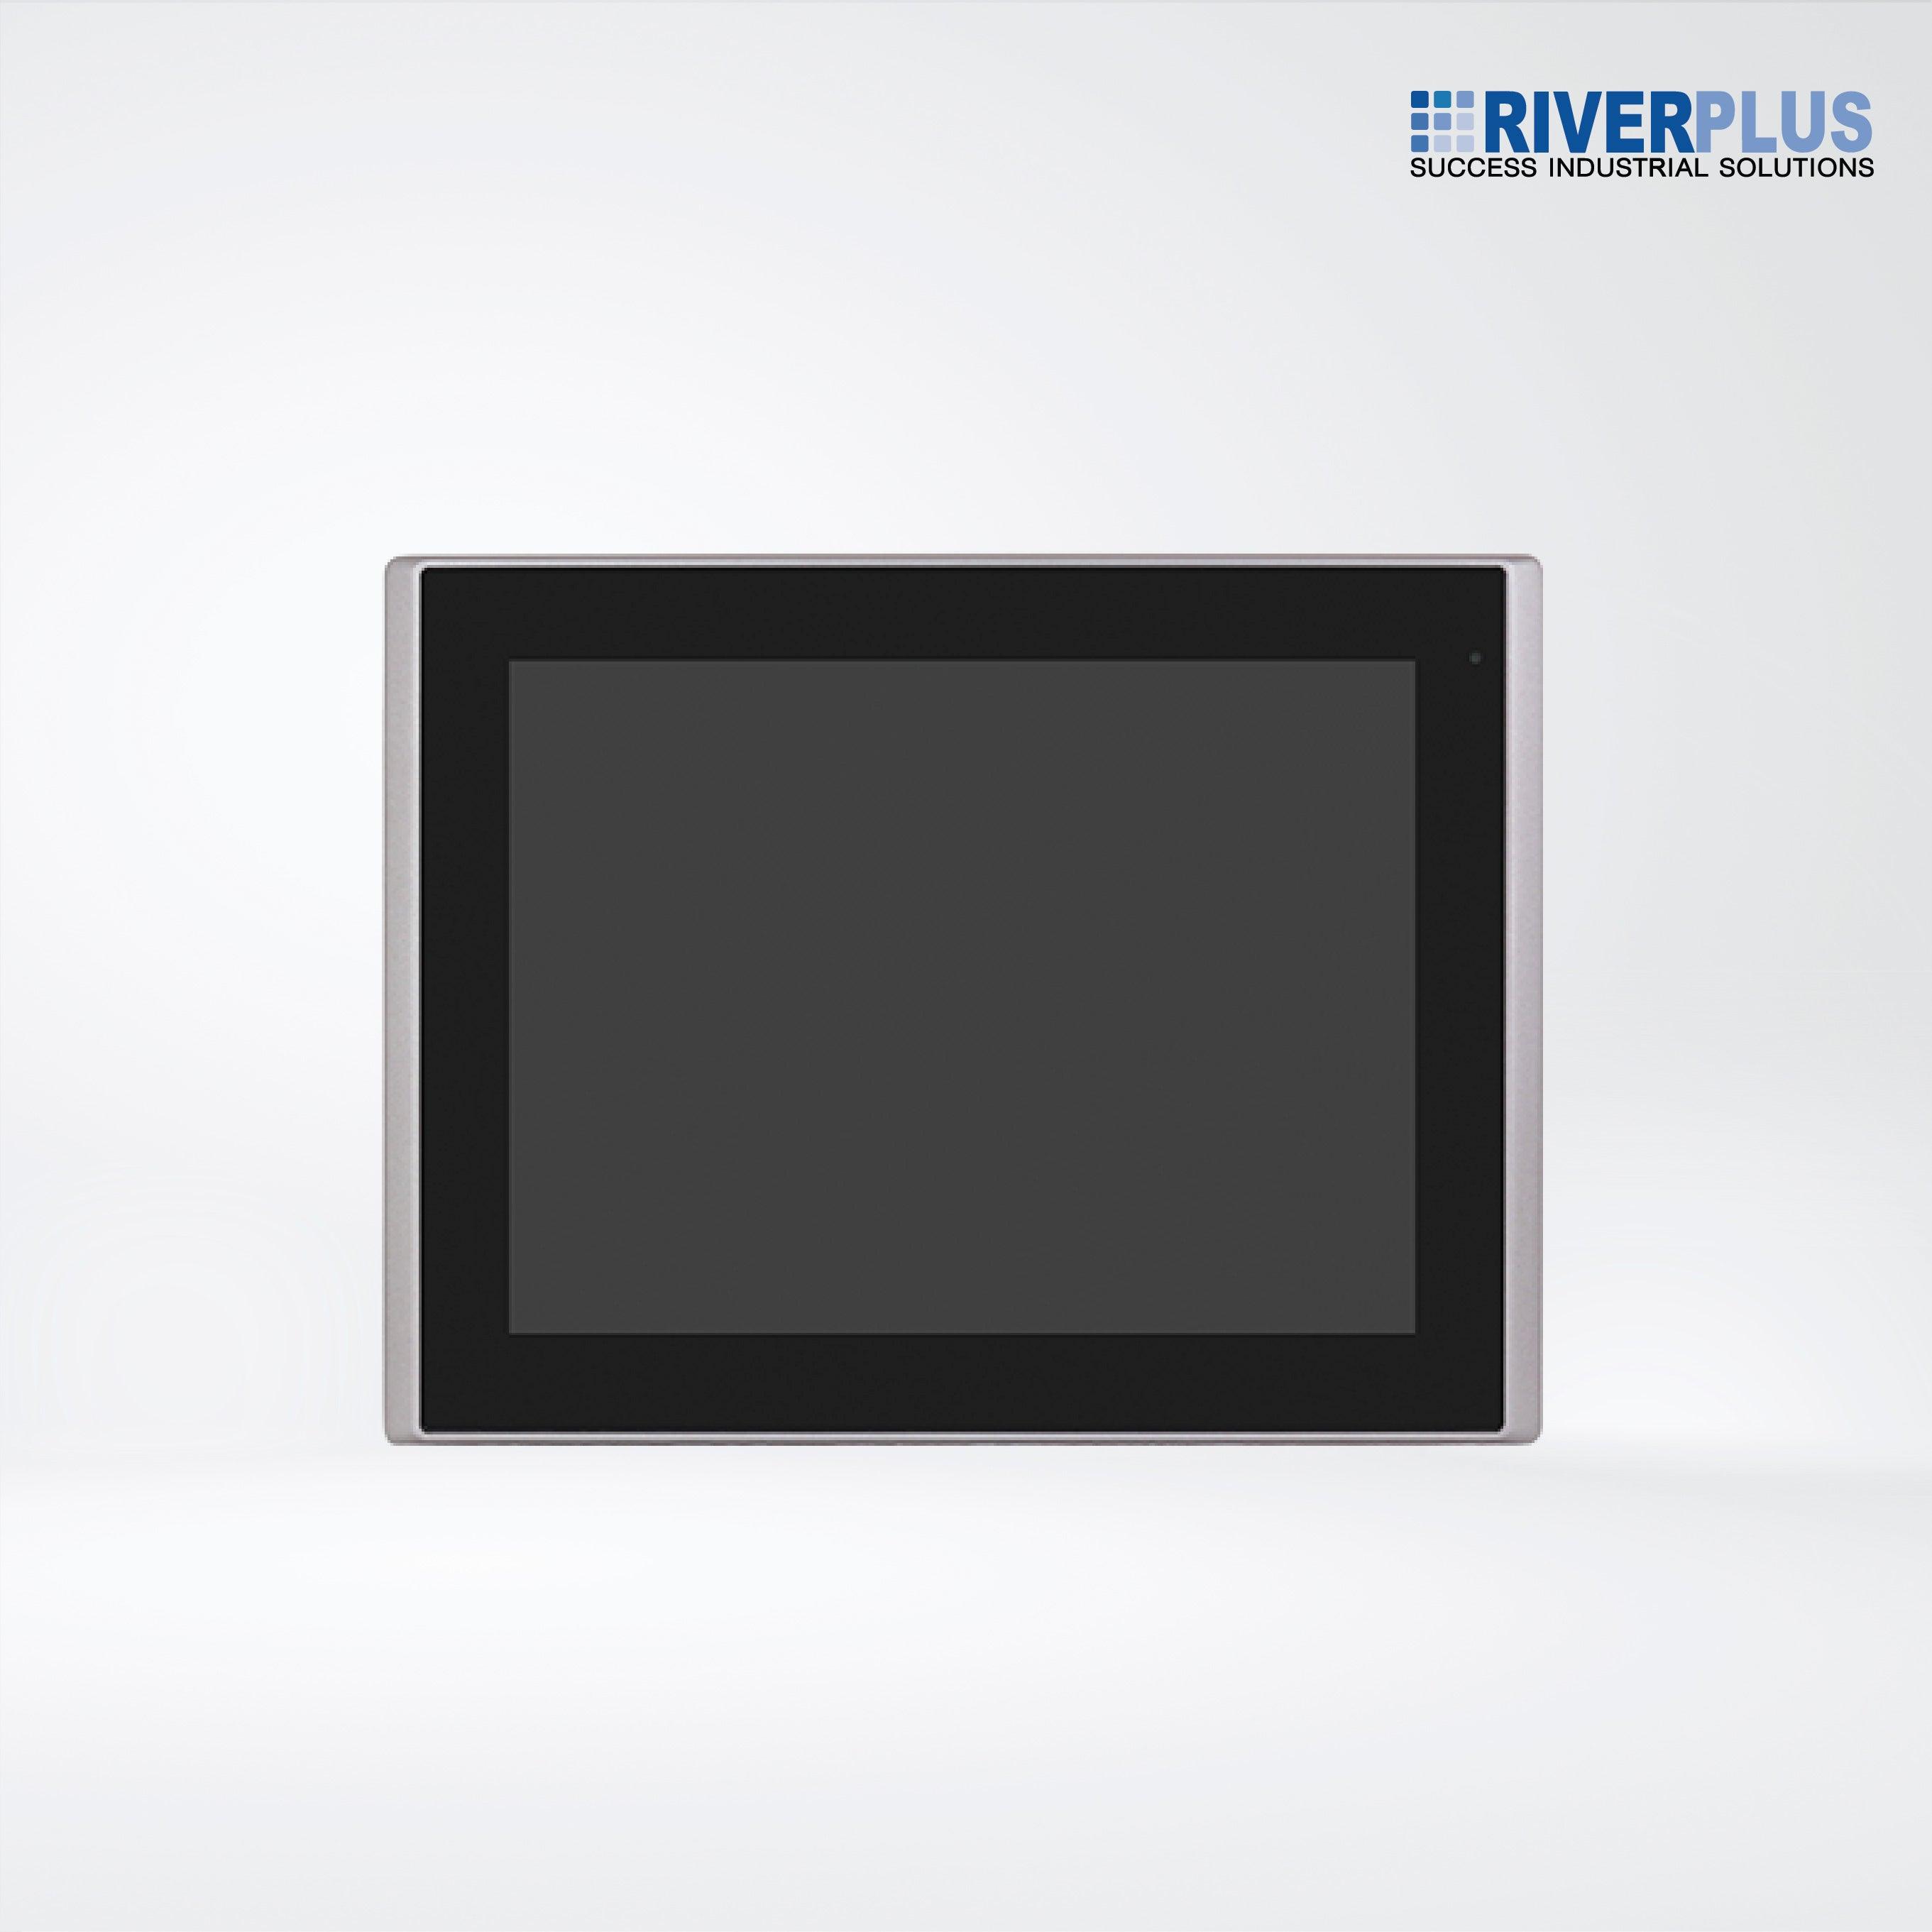 ARCHMI-912BRH 8th Gen. Intel Core i3/i5, Fanless Industrial Compact Size Panel PC - Riverplus